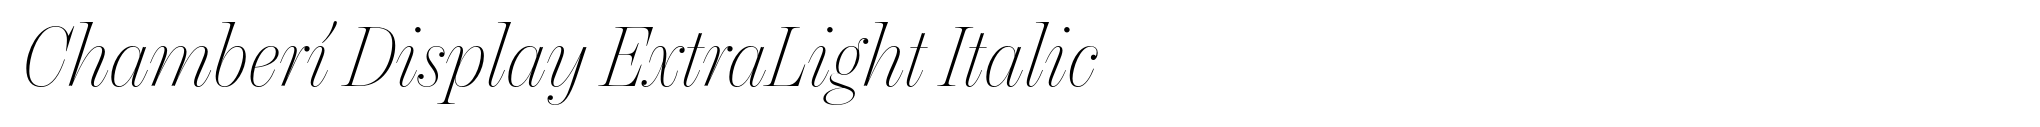 Chamberí Display ExtraLight Italic image